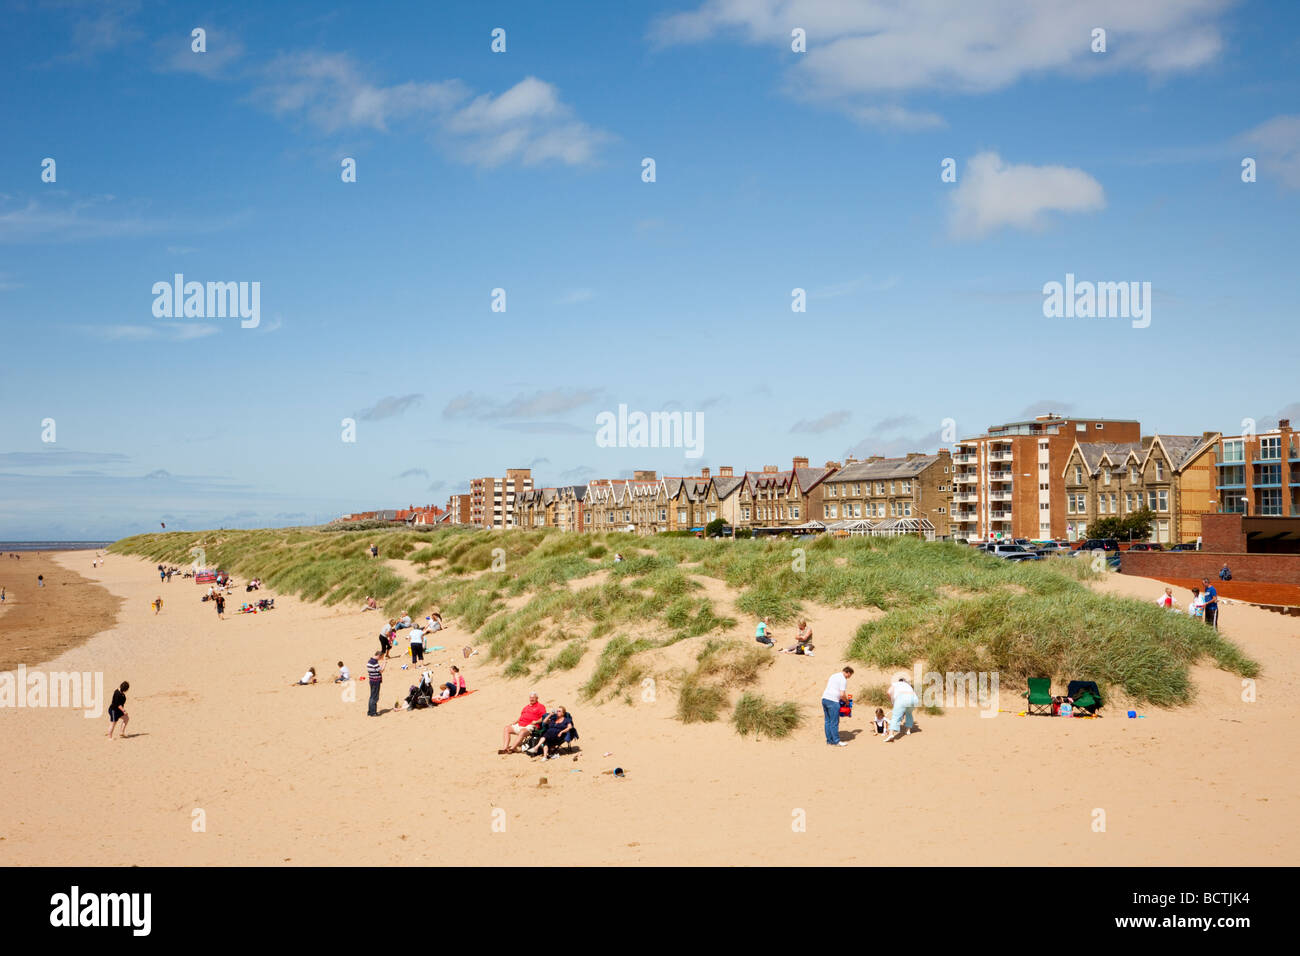 Lytham St Annes Lancashire England UK Sand dunes on sandy beach in seaside resort on the Fylde coast Stock Photo